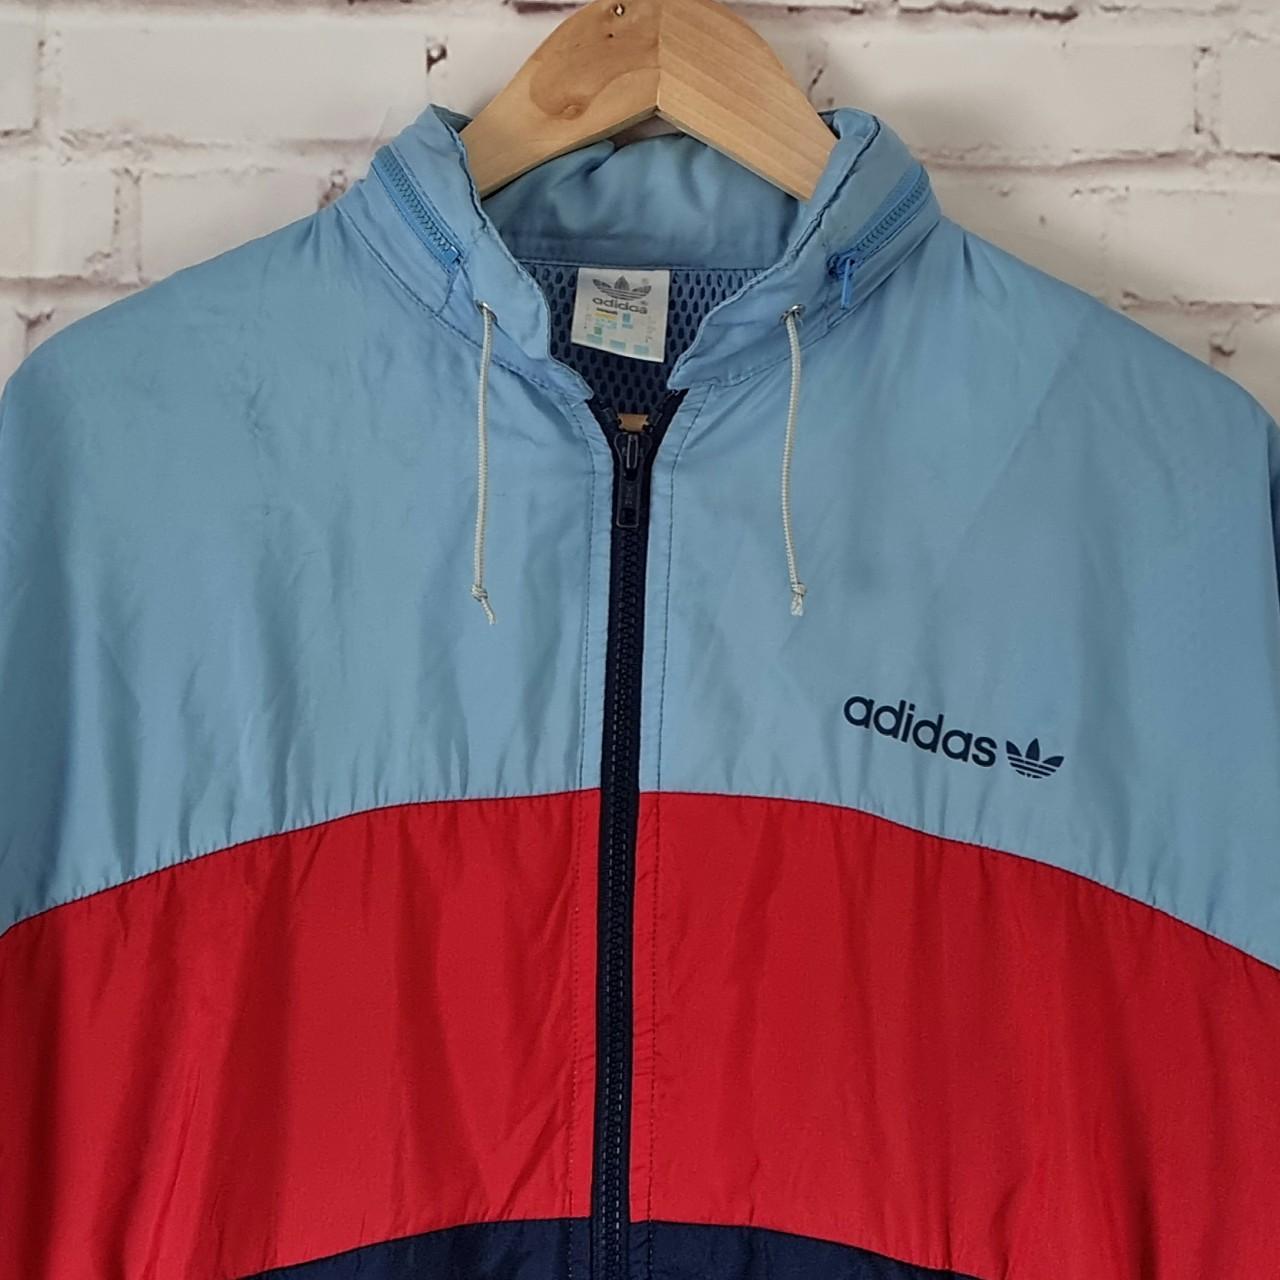 Adidas 1980s original mesh lined jacket / track top... - Depop